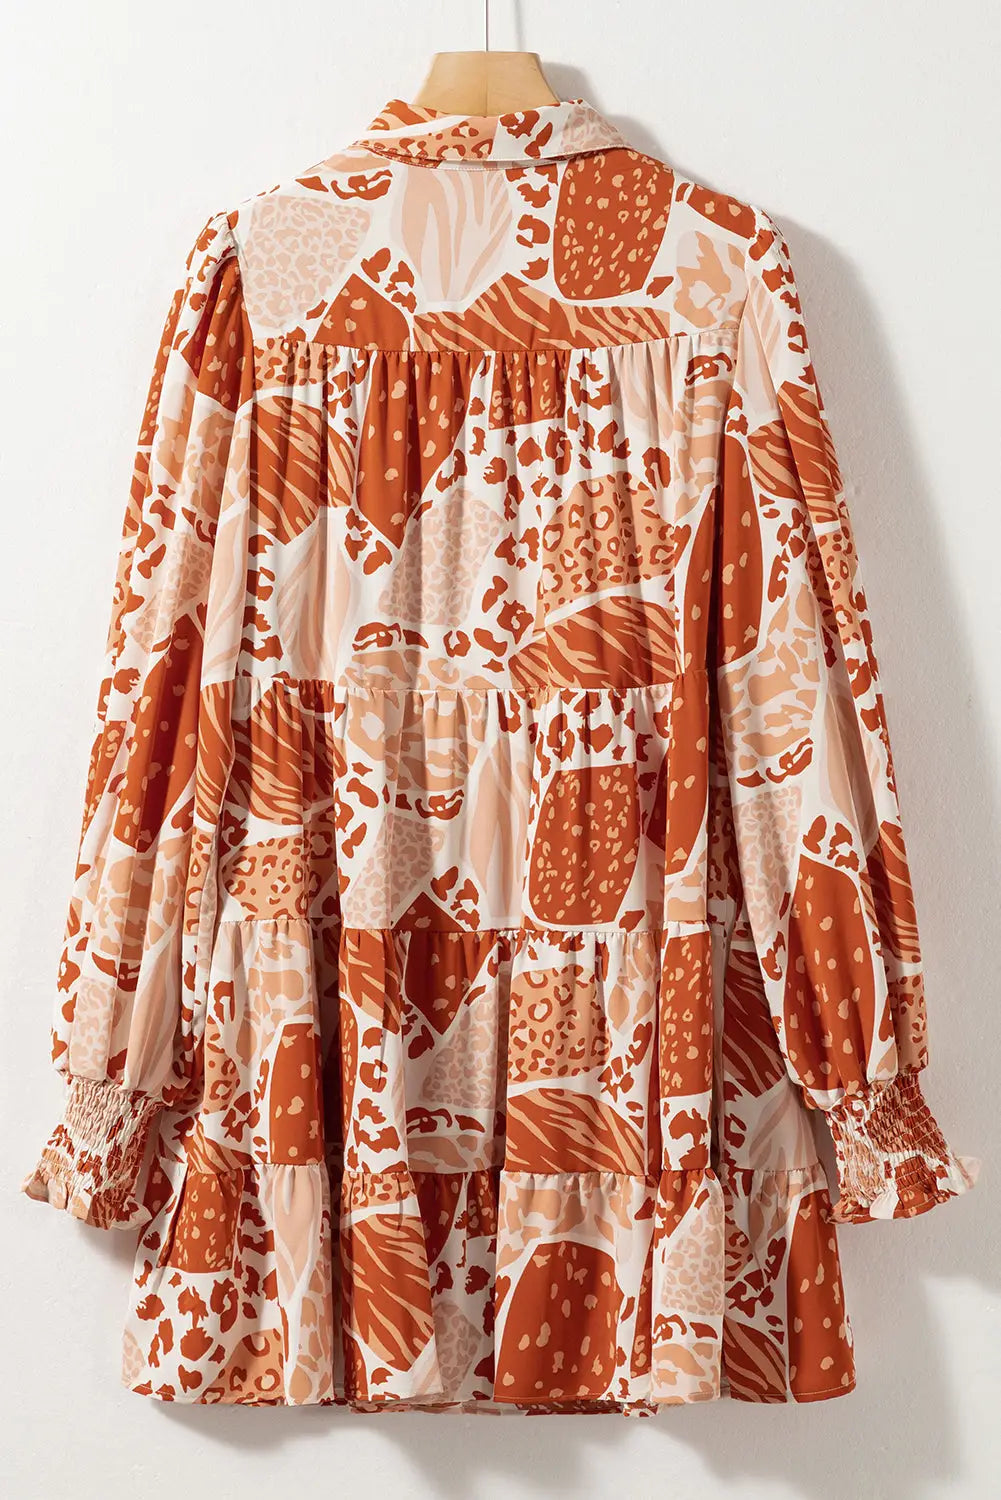 Brown multi pattern swing dress - dresses